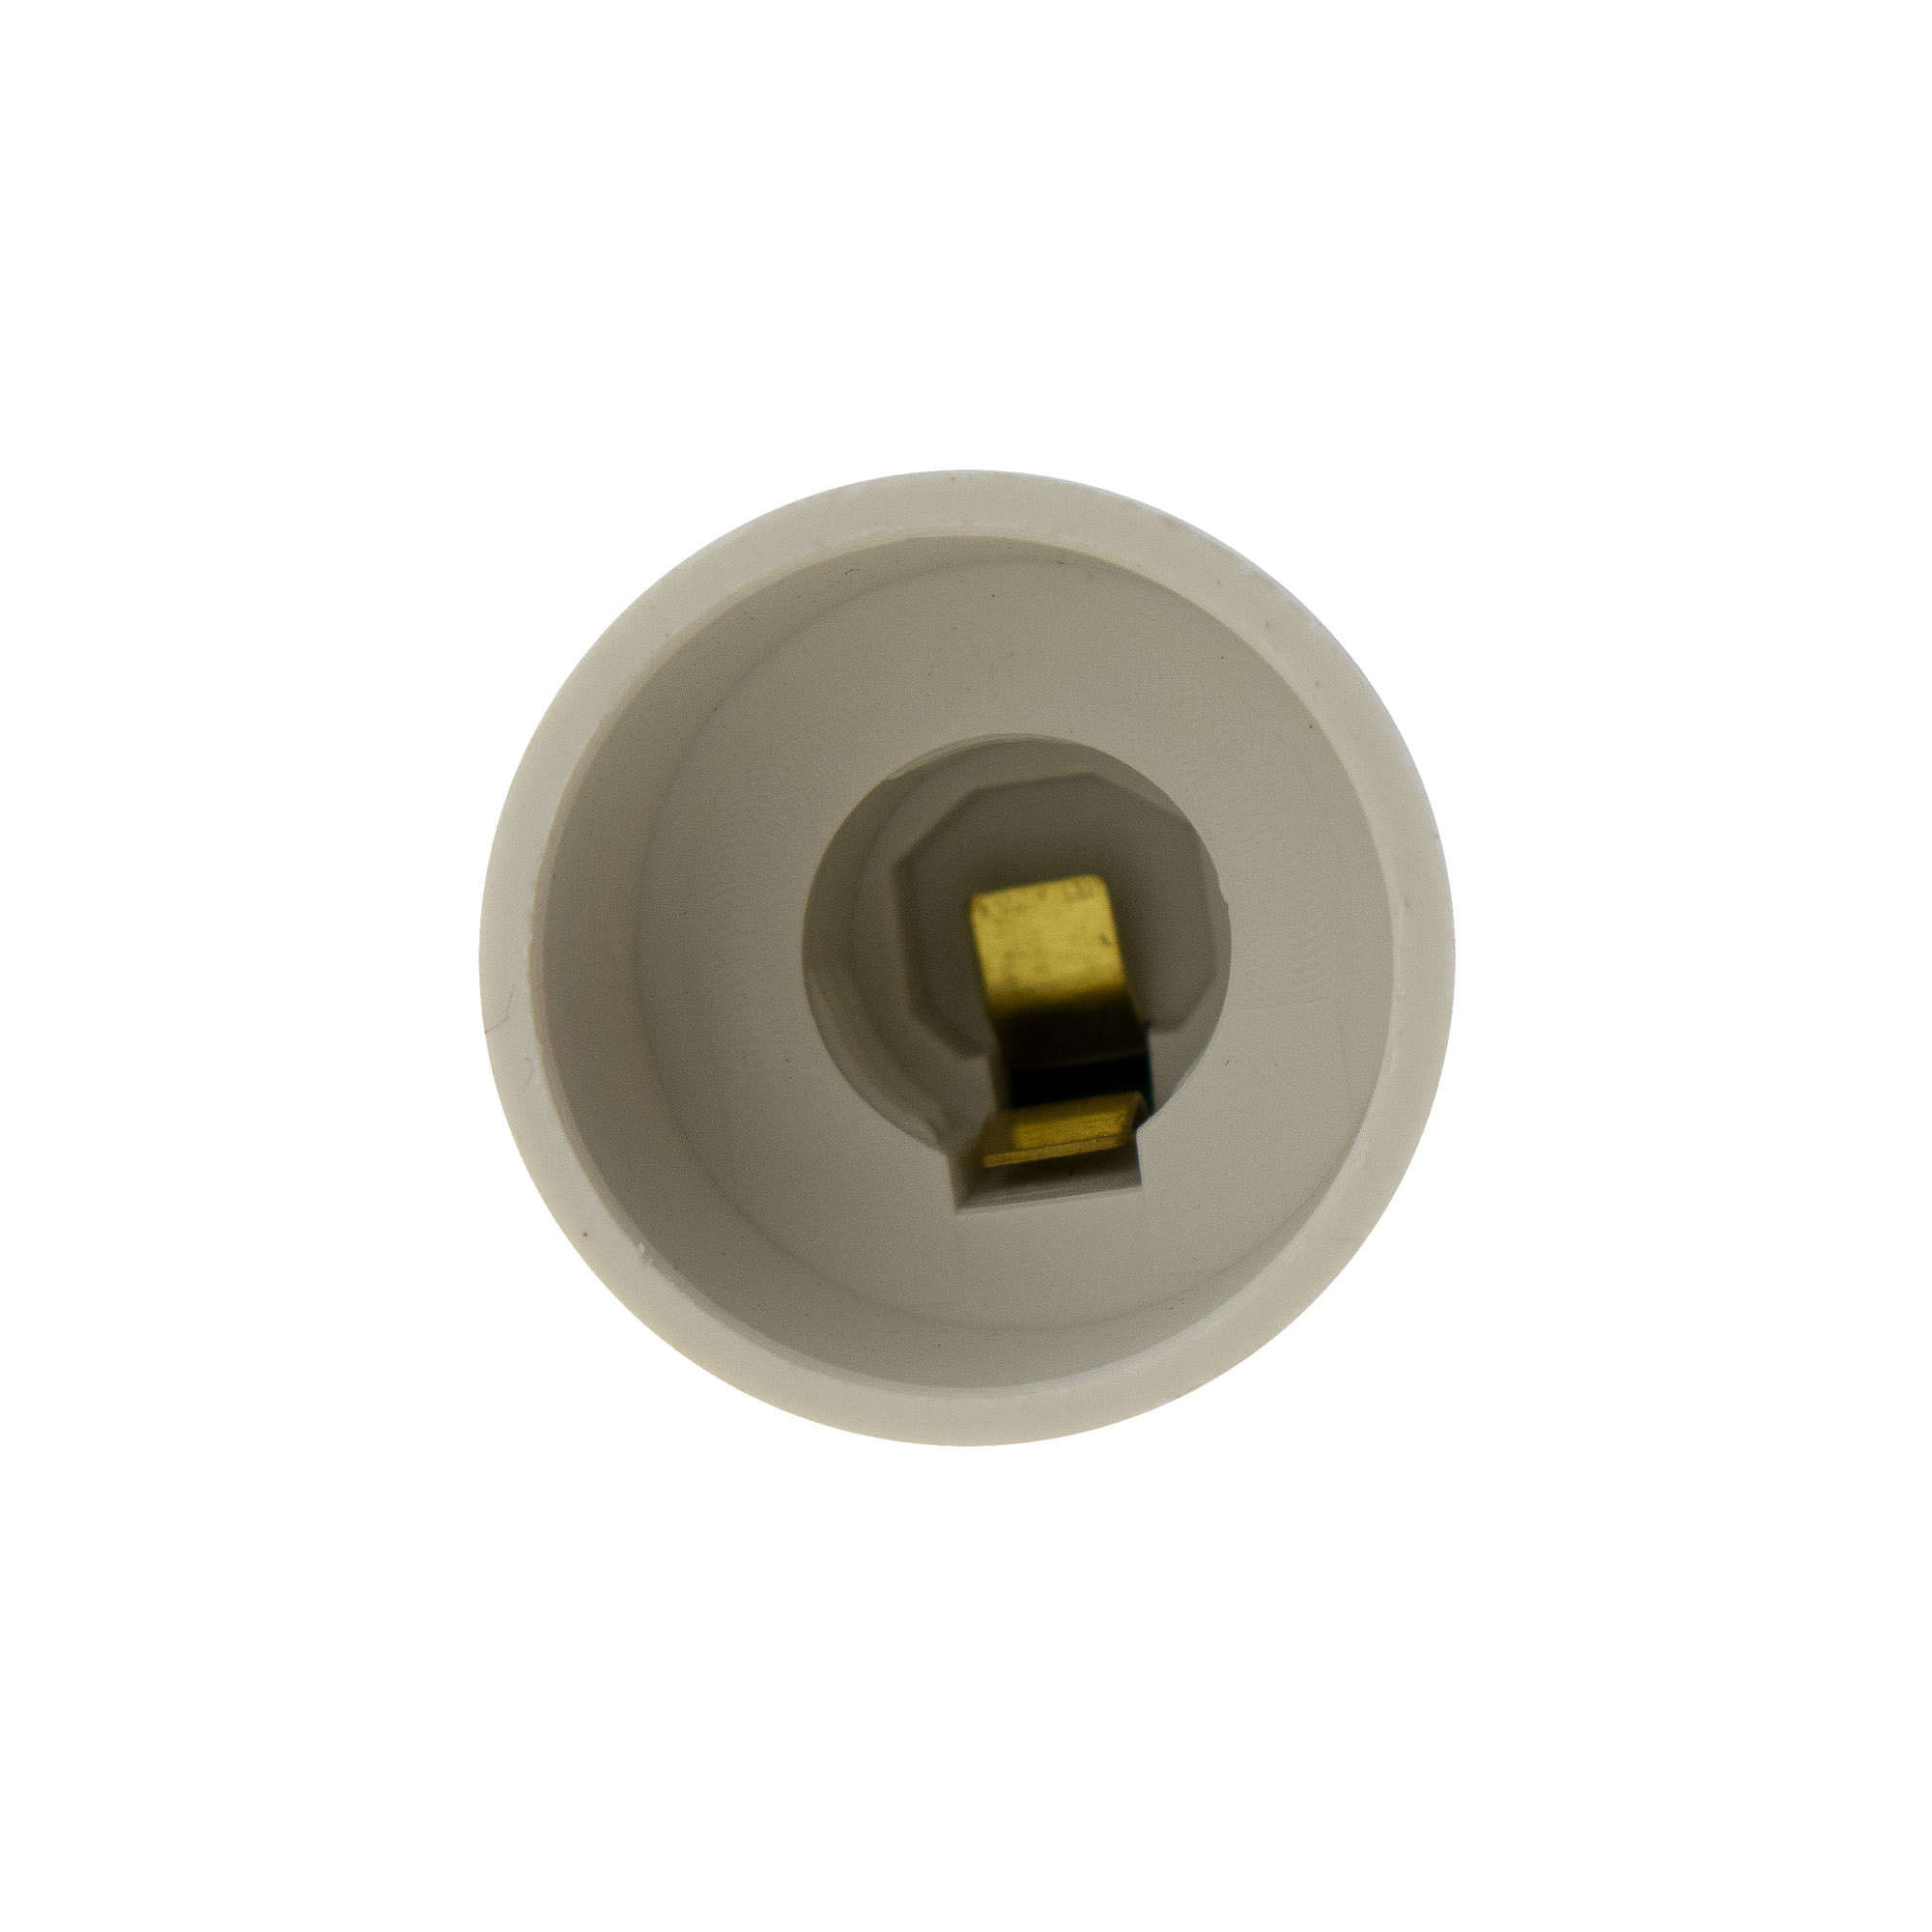 Lamp socket adaptor E27 to E14 - 4PCS